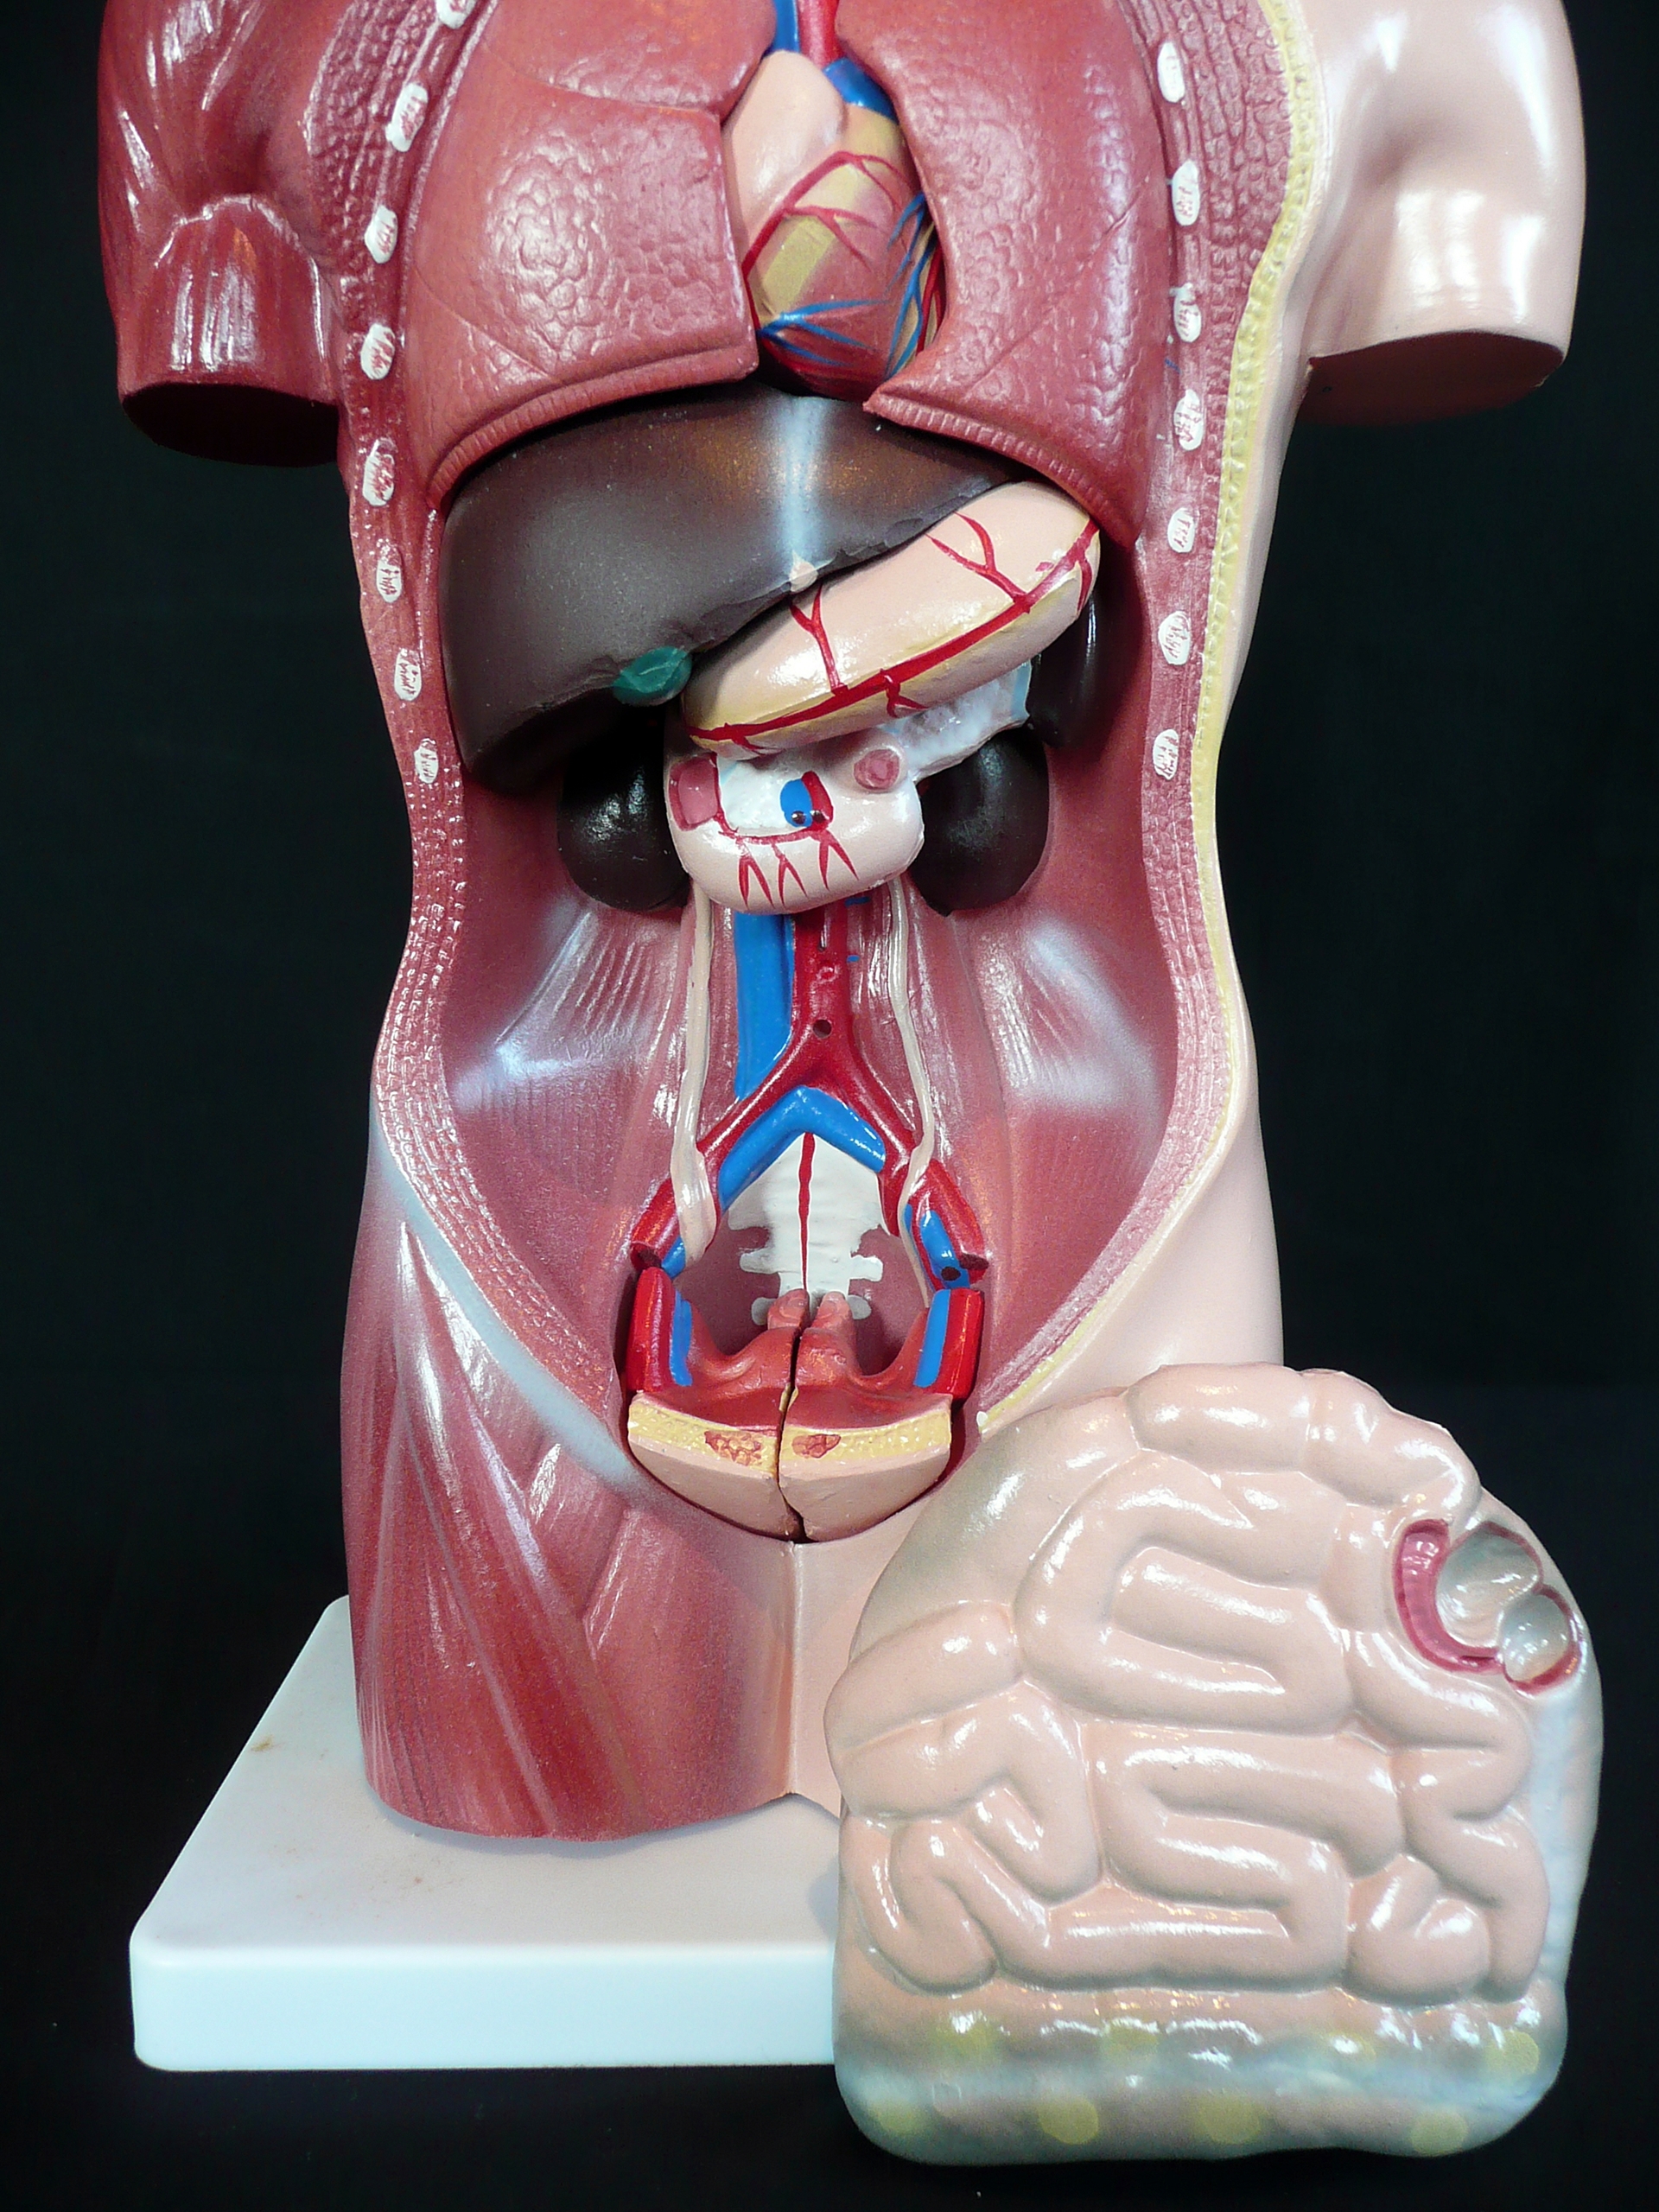 42cm Tall Human Anatomical Female Torso Model | Torso Models - Store - Medical Models